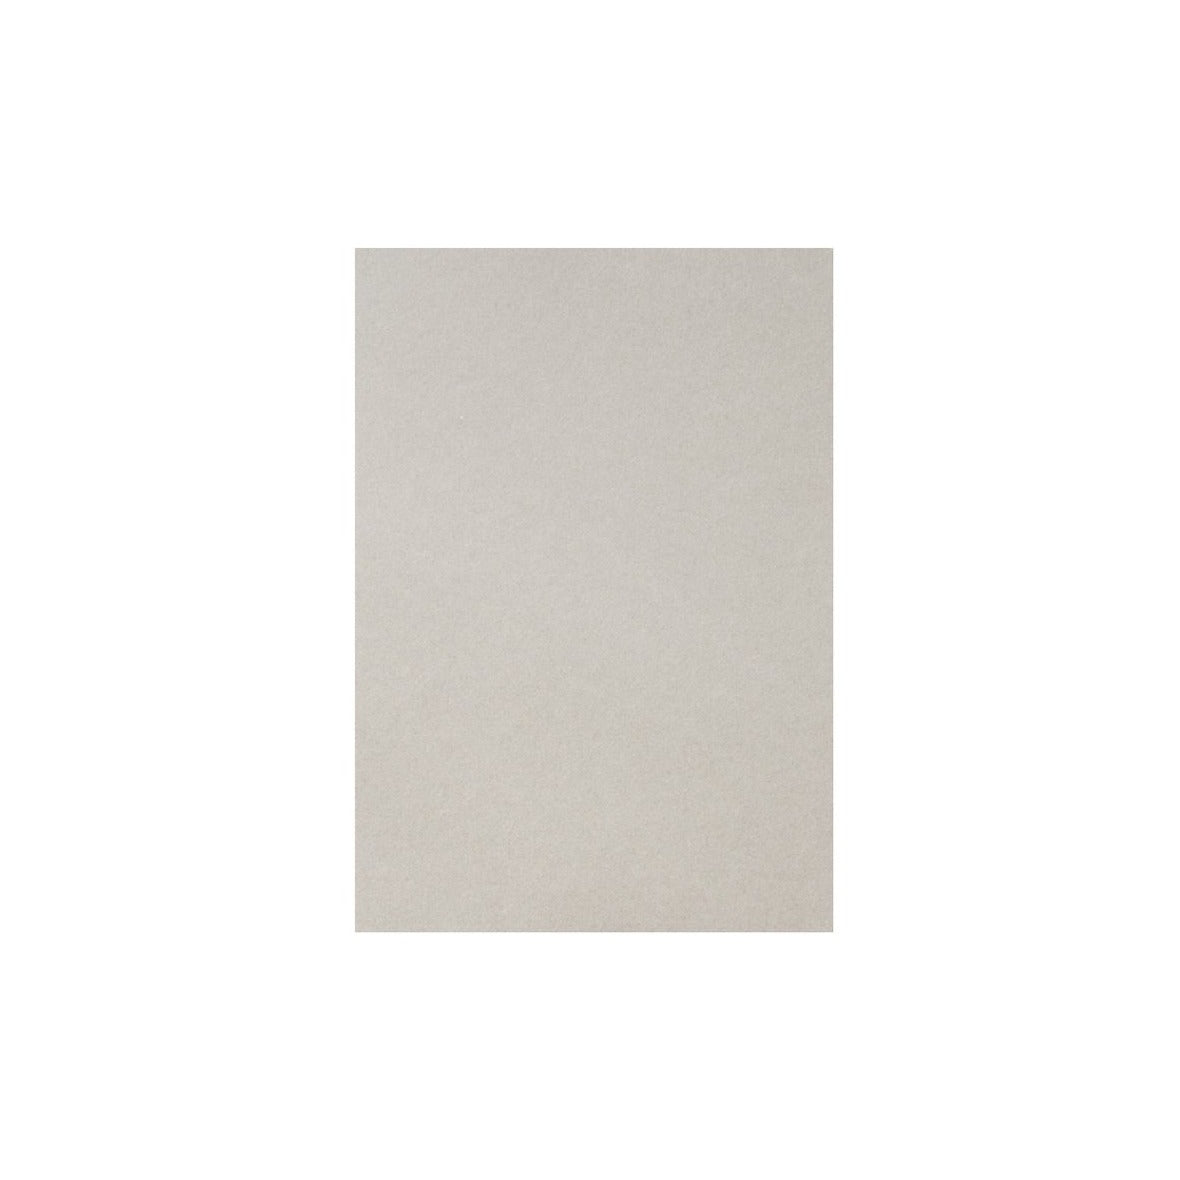 Notizbuch Caprice light grey | Trolls Paper | Handmade in Seoul Südkorea